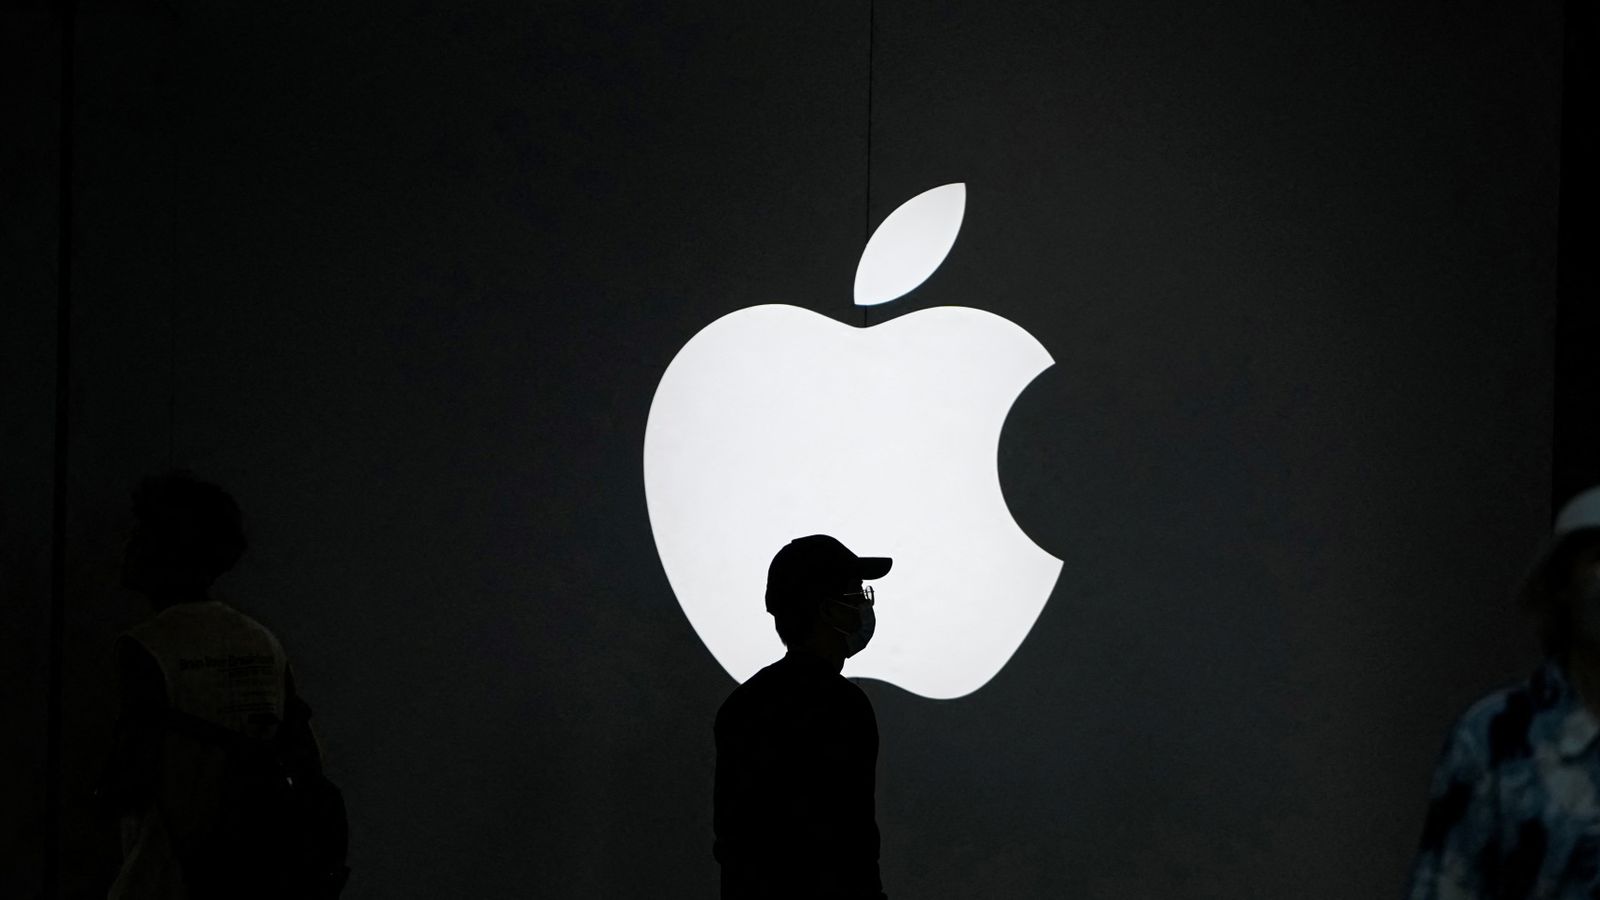 Apple iPhone sales slump in China as Huawei's foldable phones gain momentum